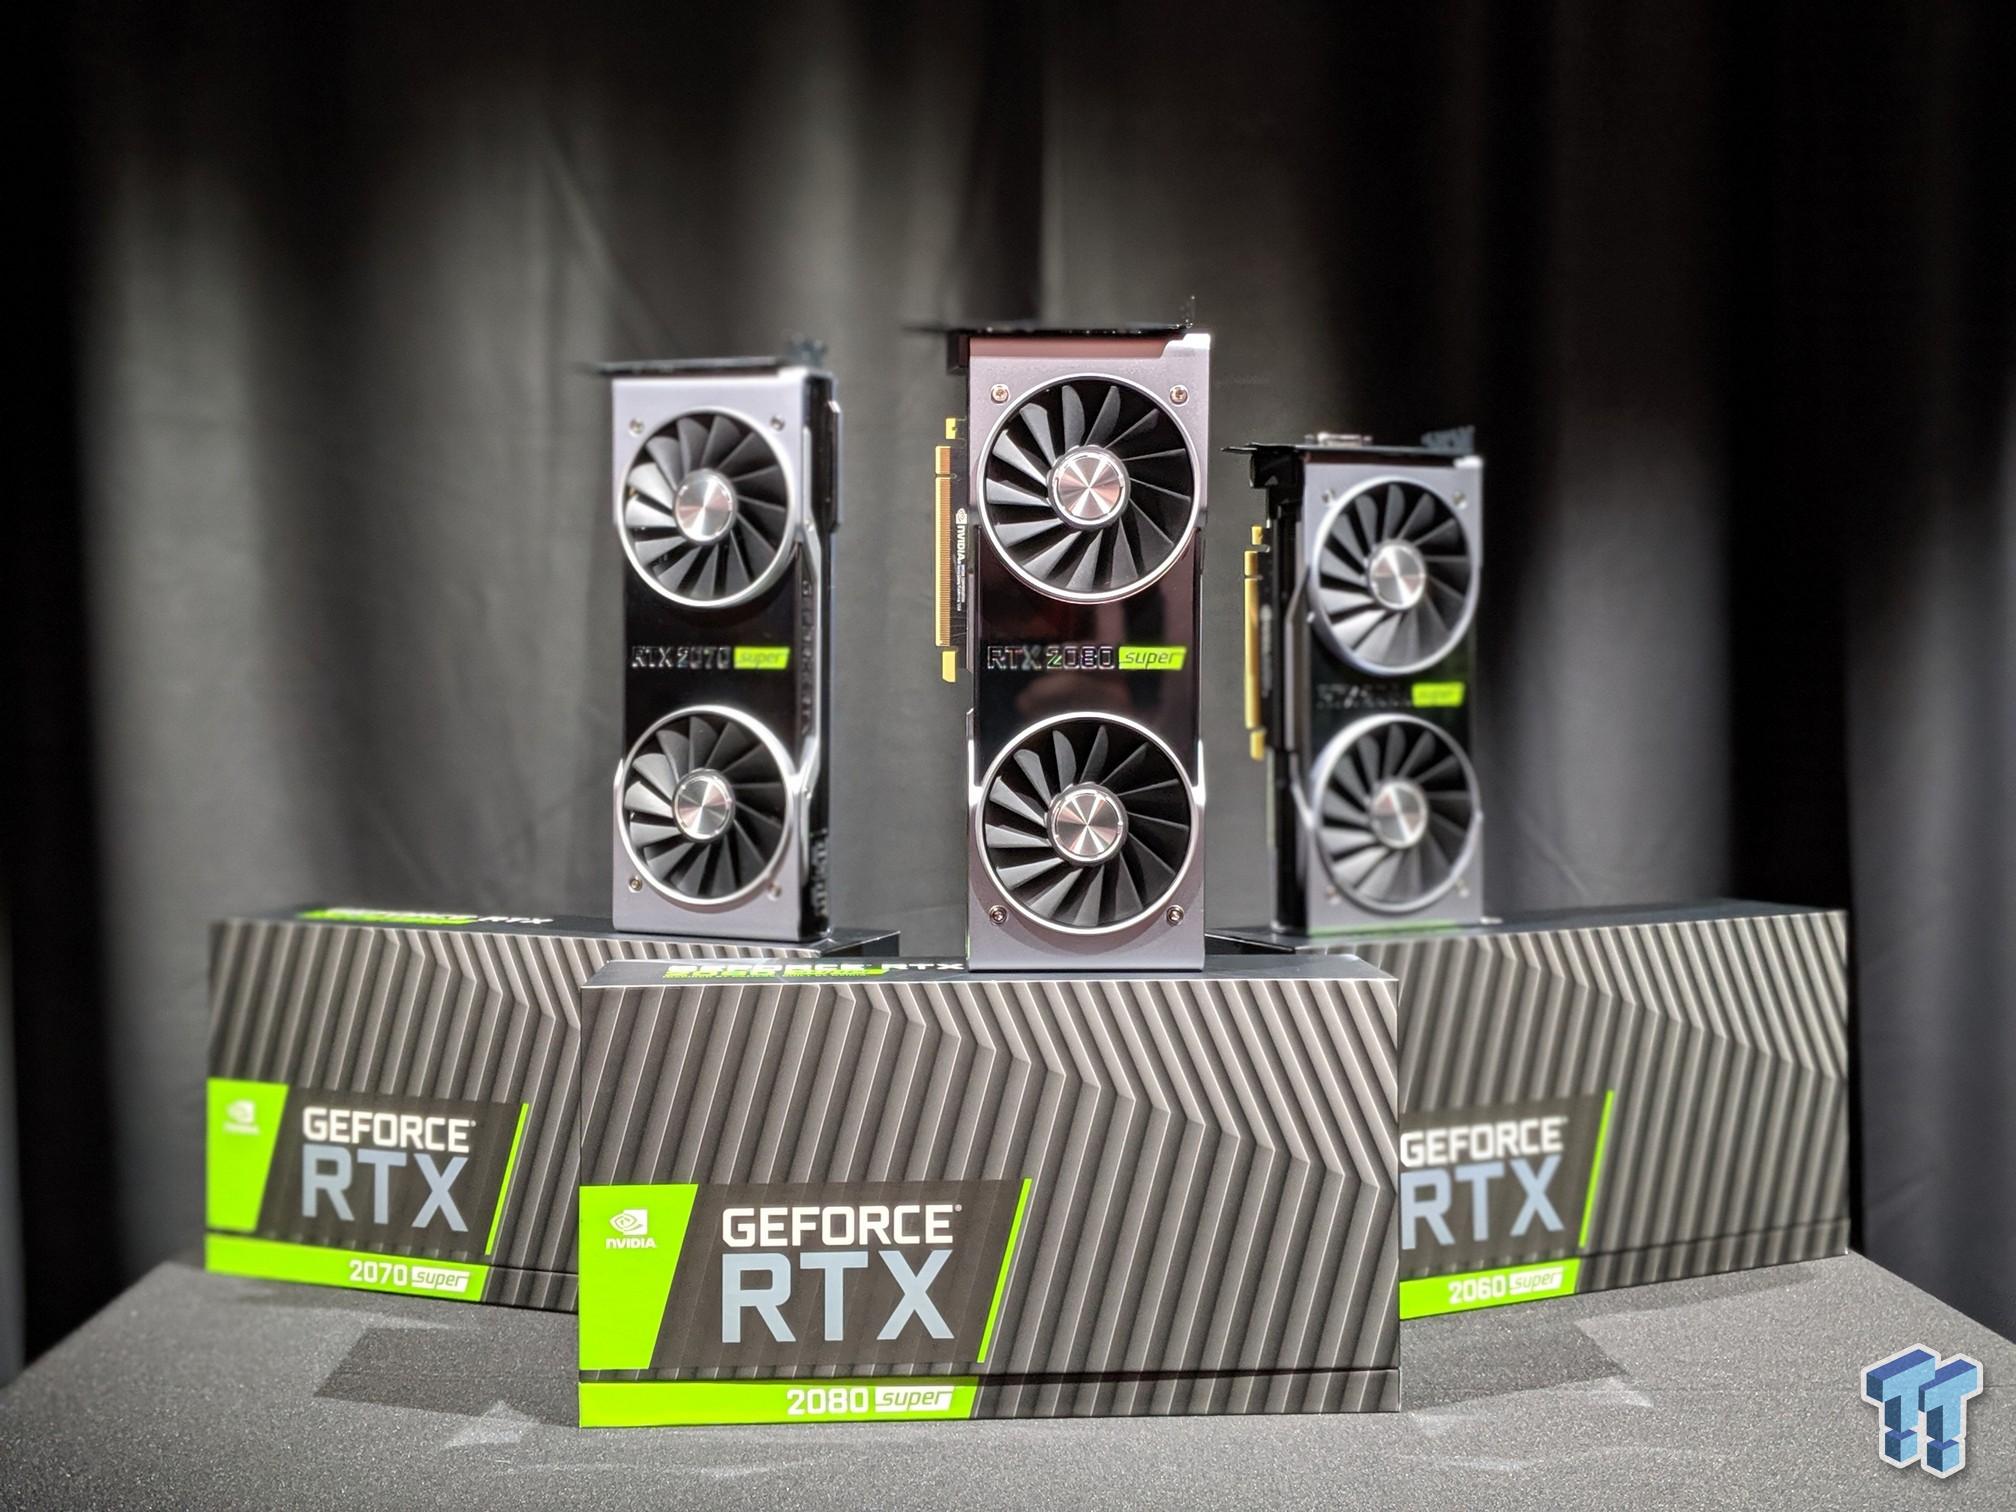 No, won't be a GeForce RTX SUPER card